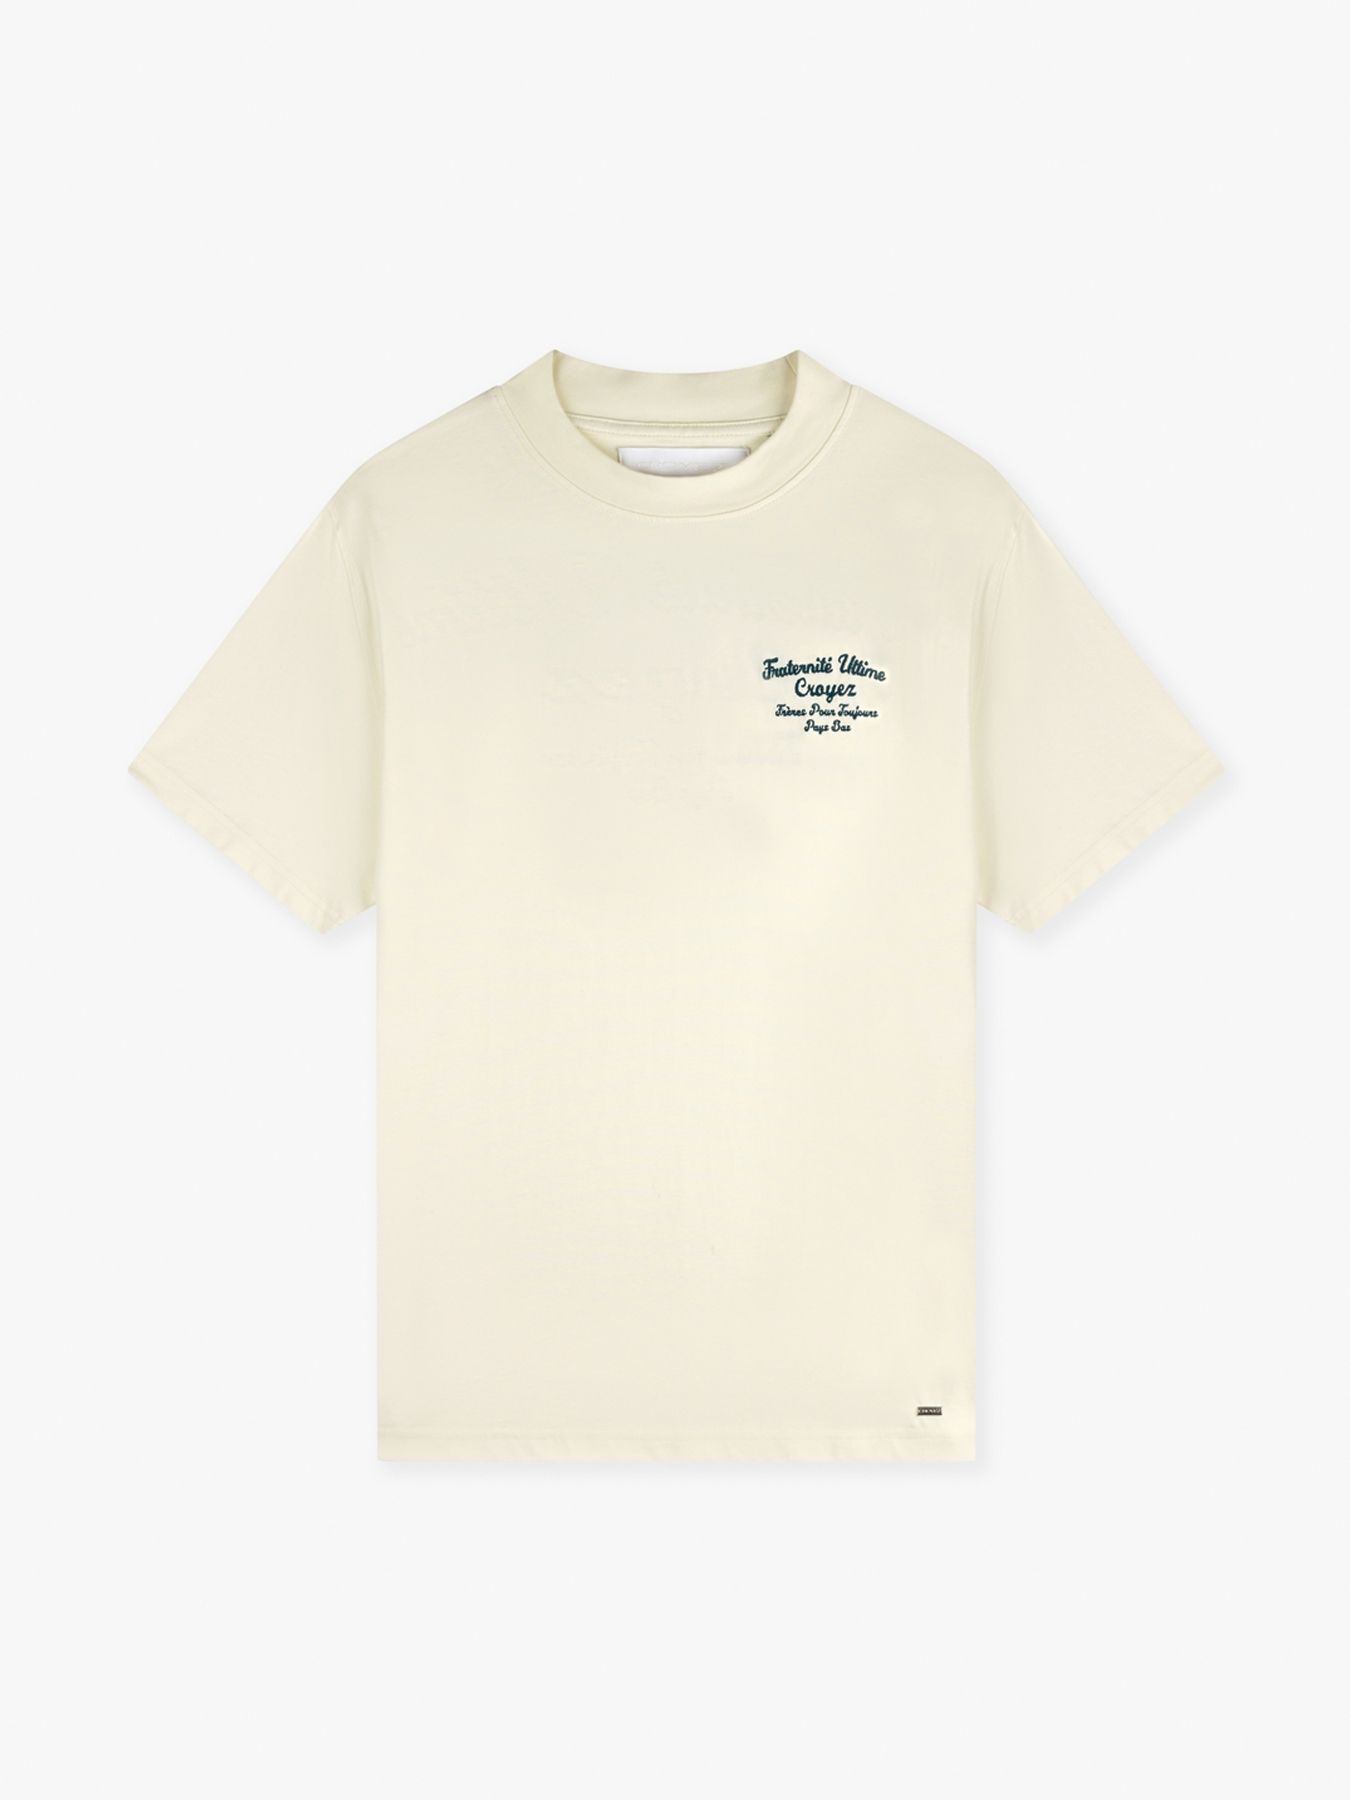 Croyez Fraternite T-shirt Buttercream/petrol 00108225-782